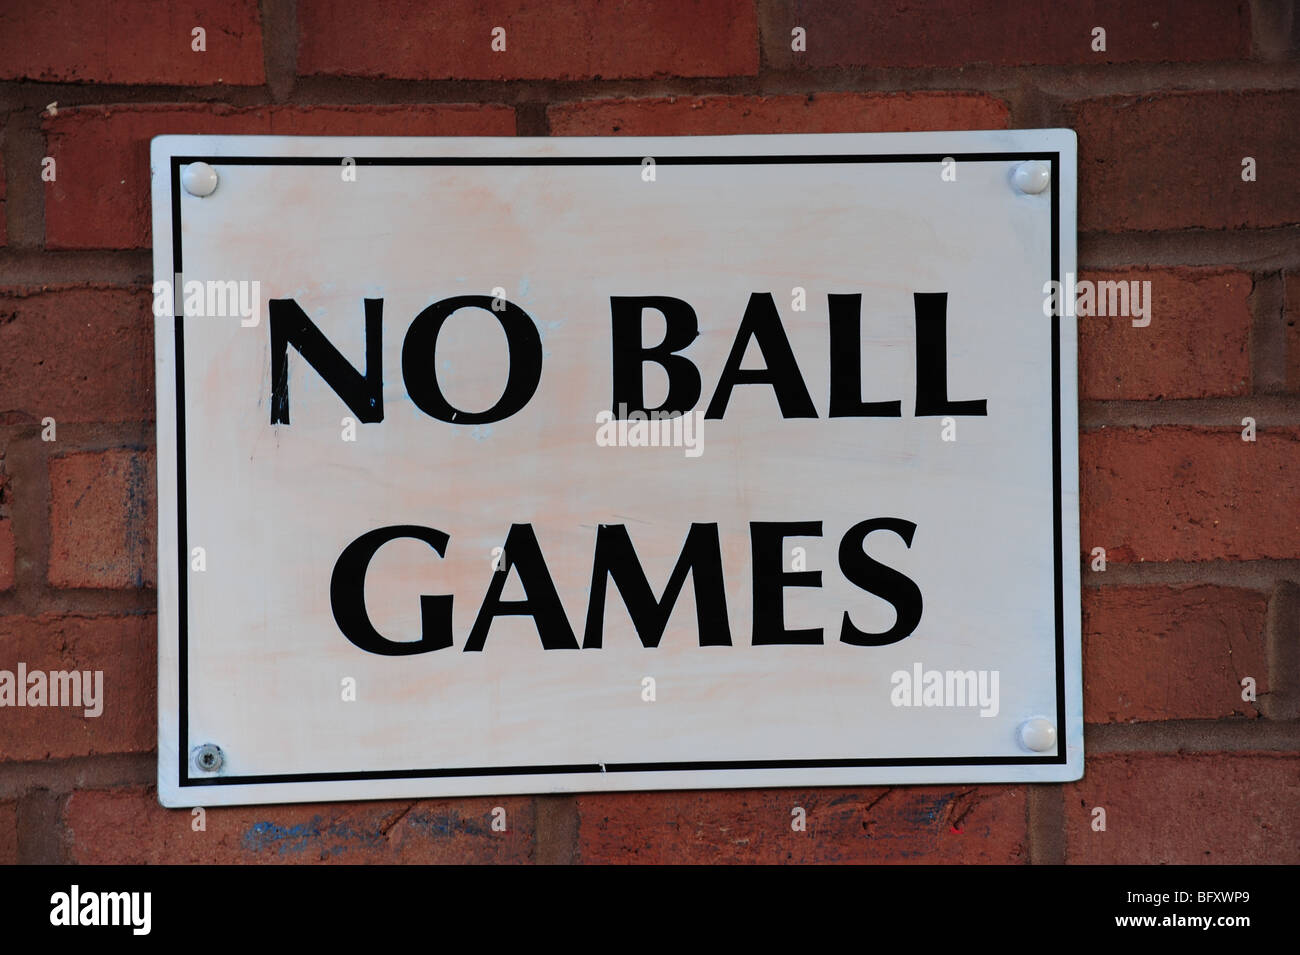 No ball games sign Stock Photo